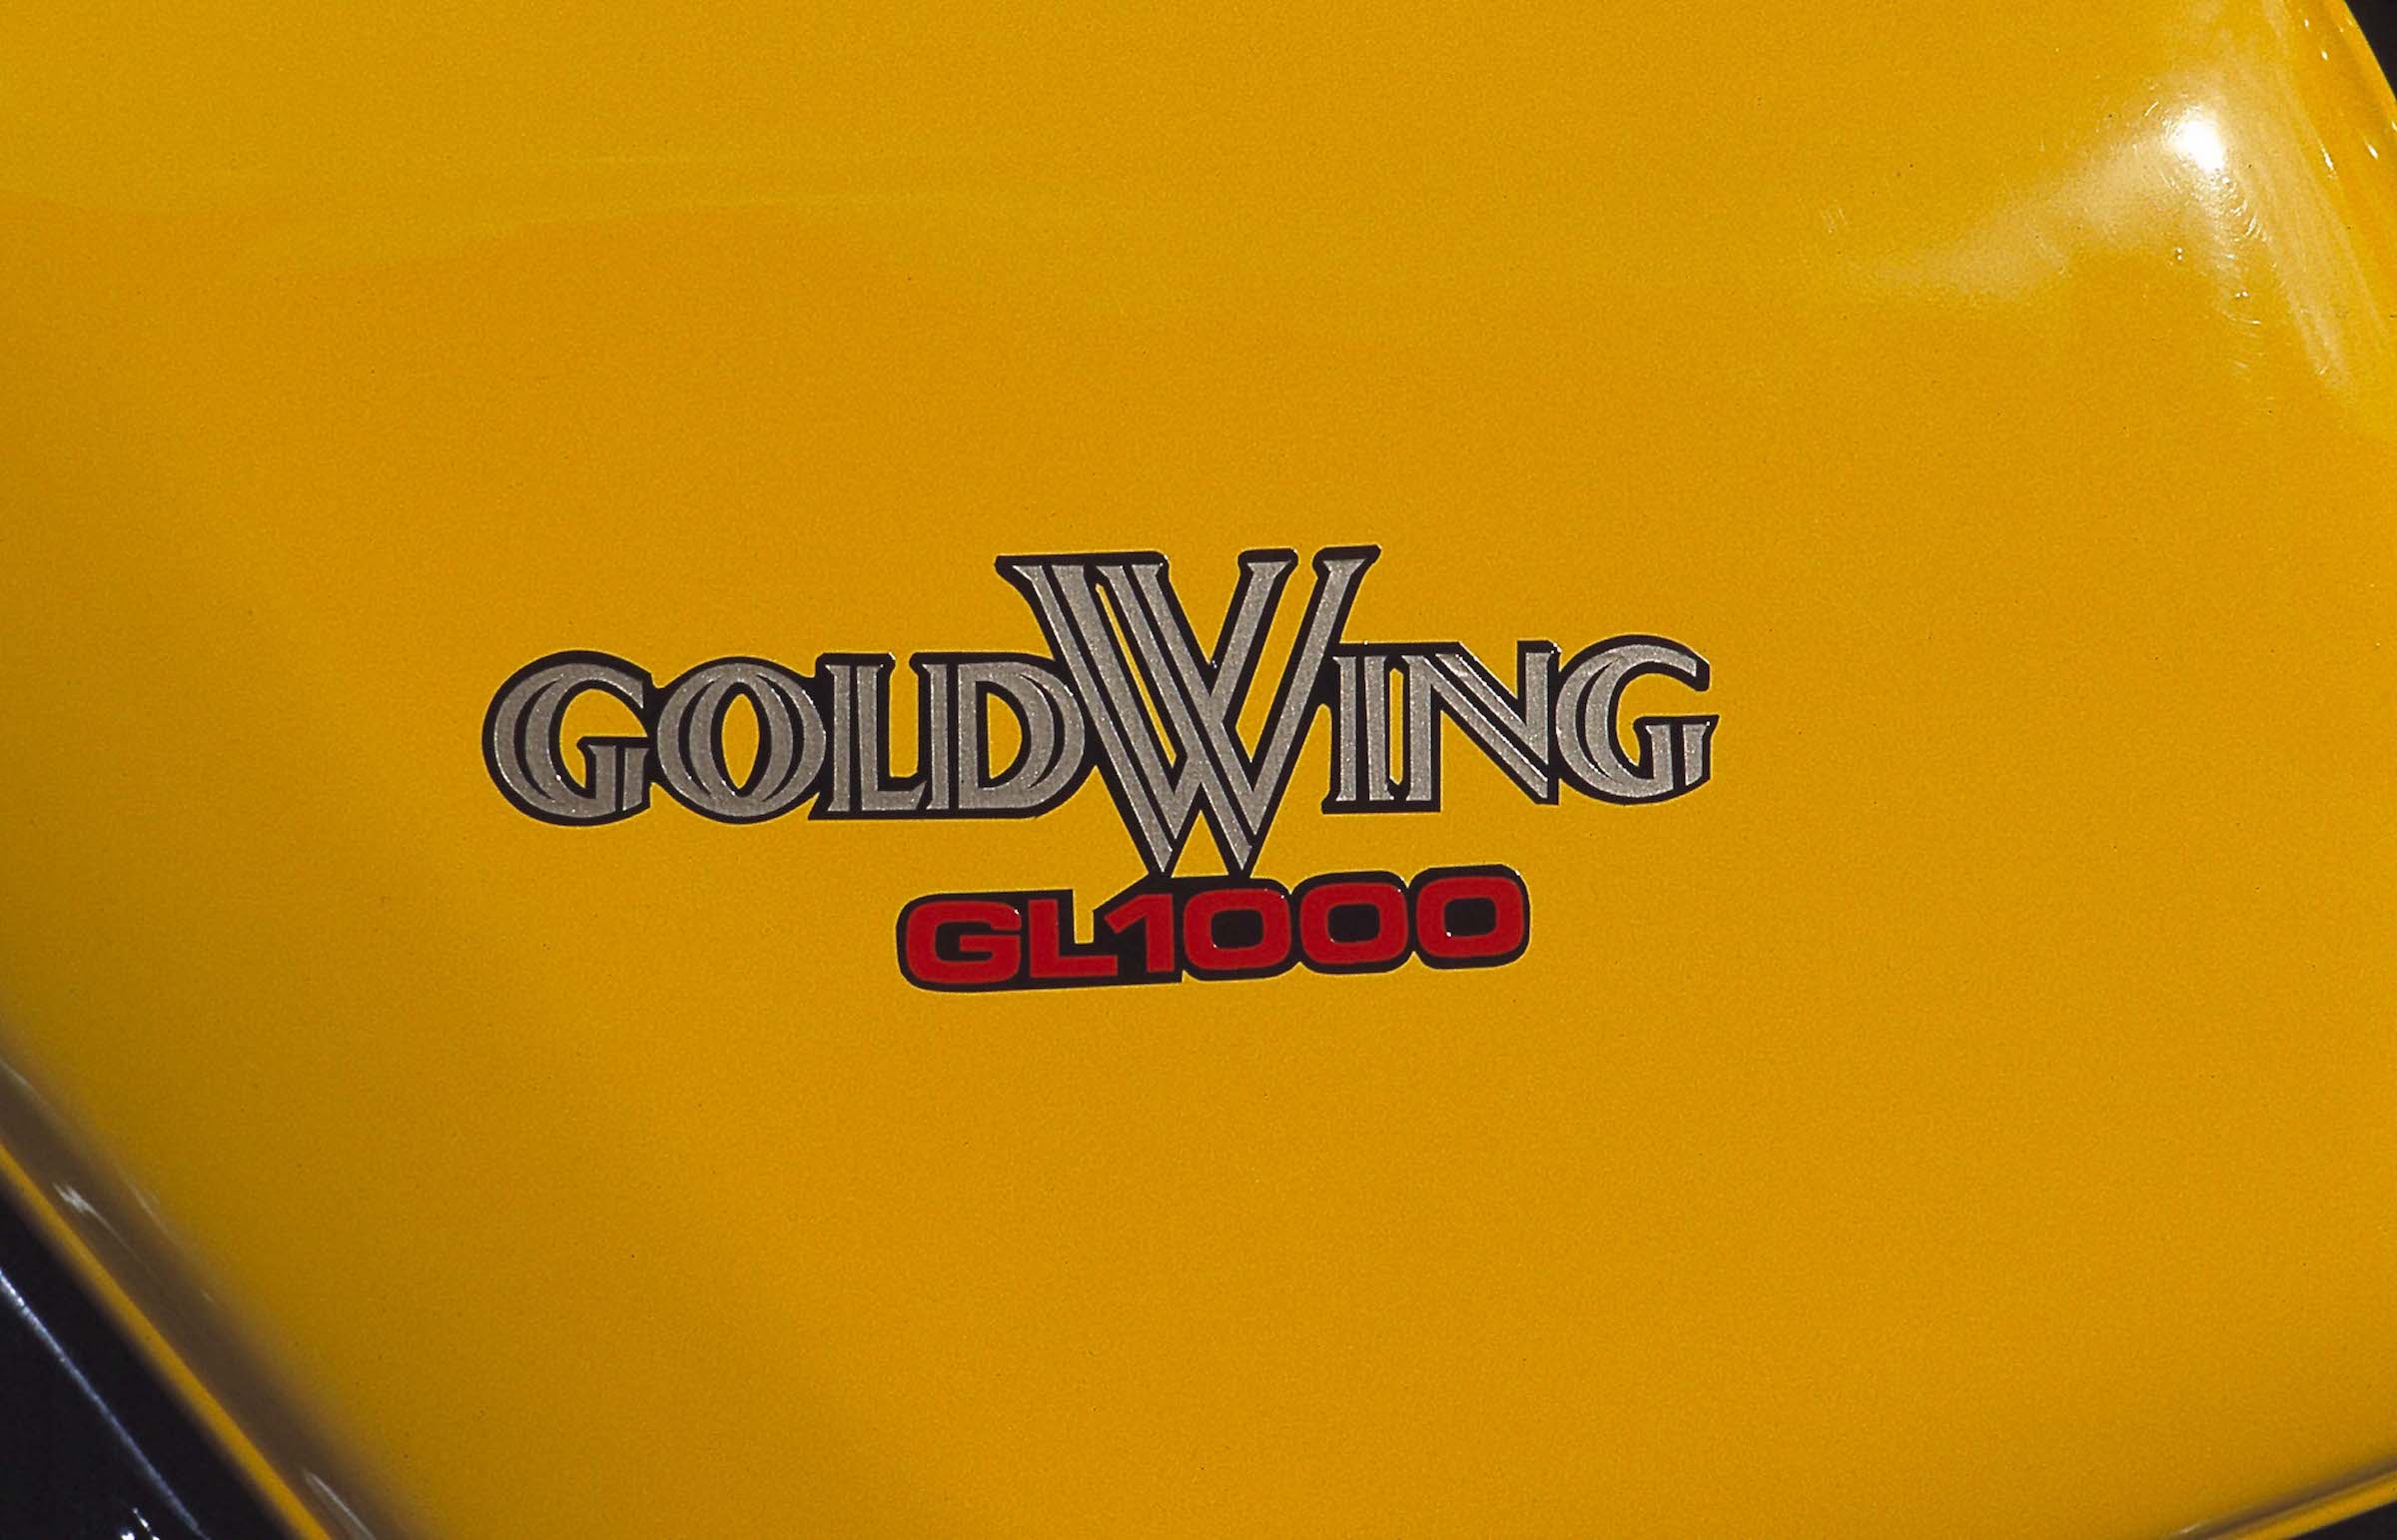 Honda Gold Wing badge